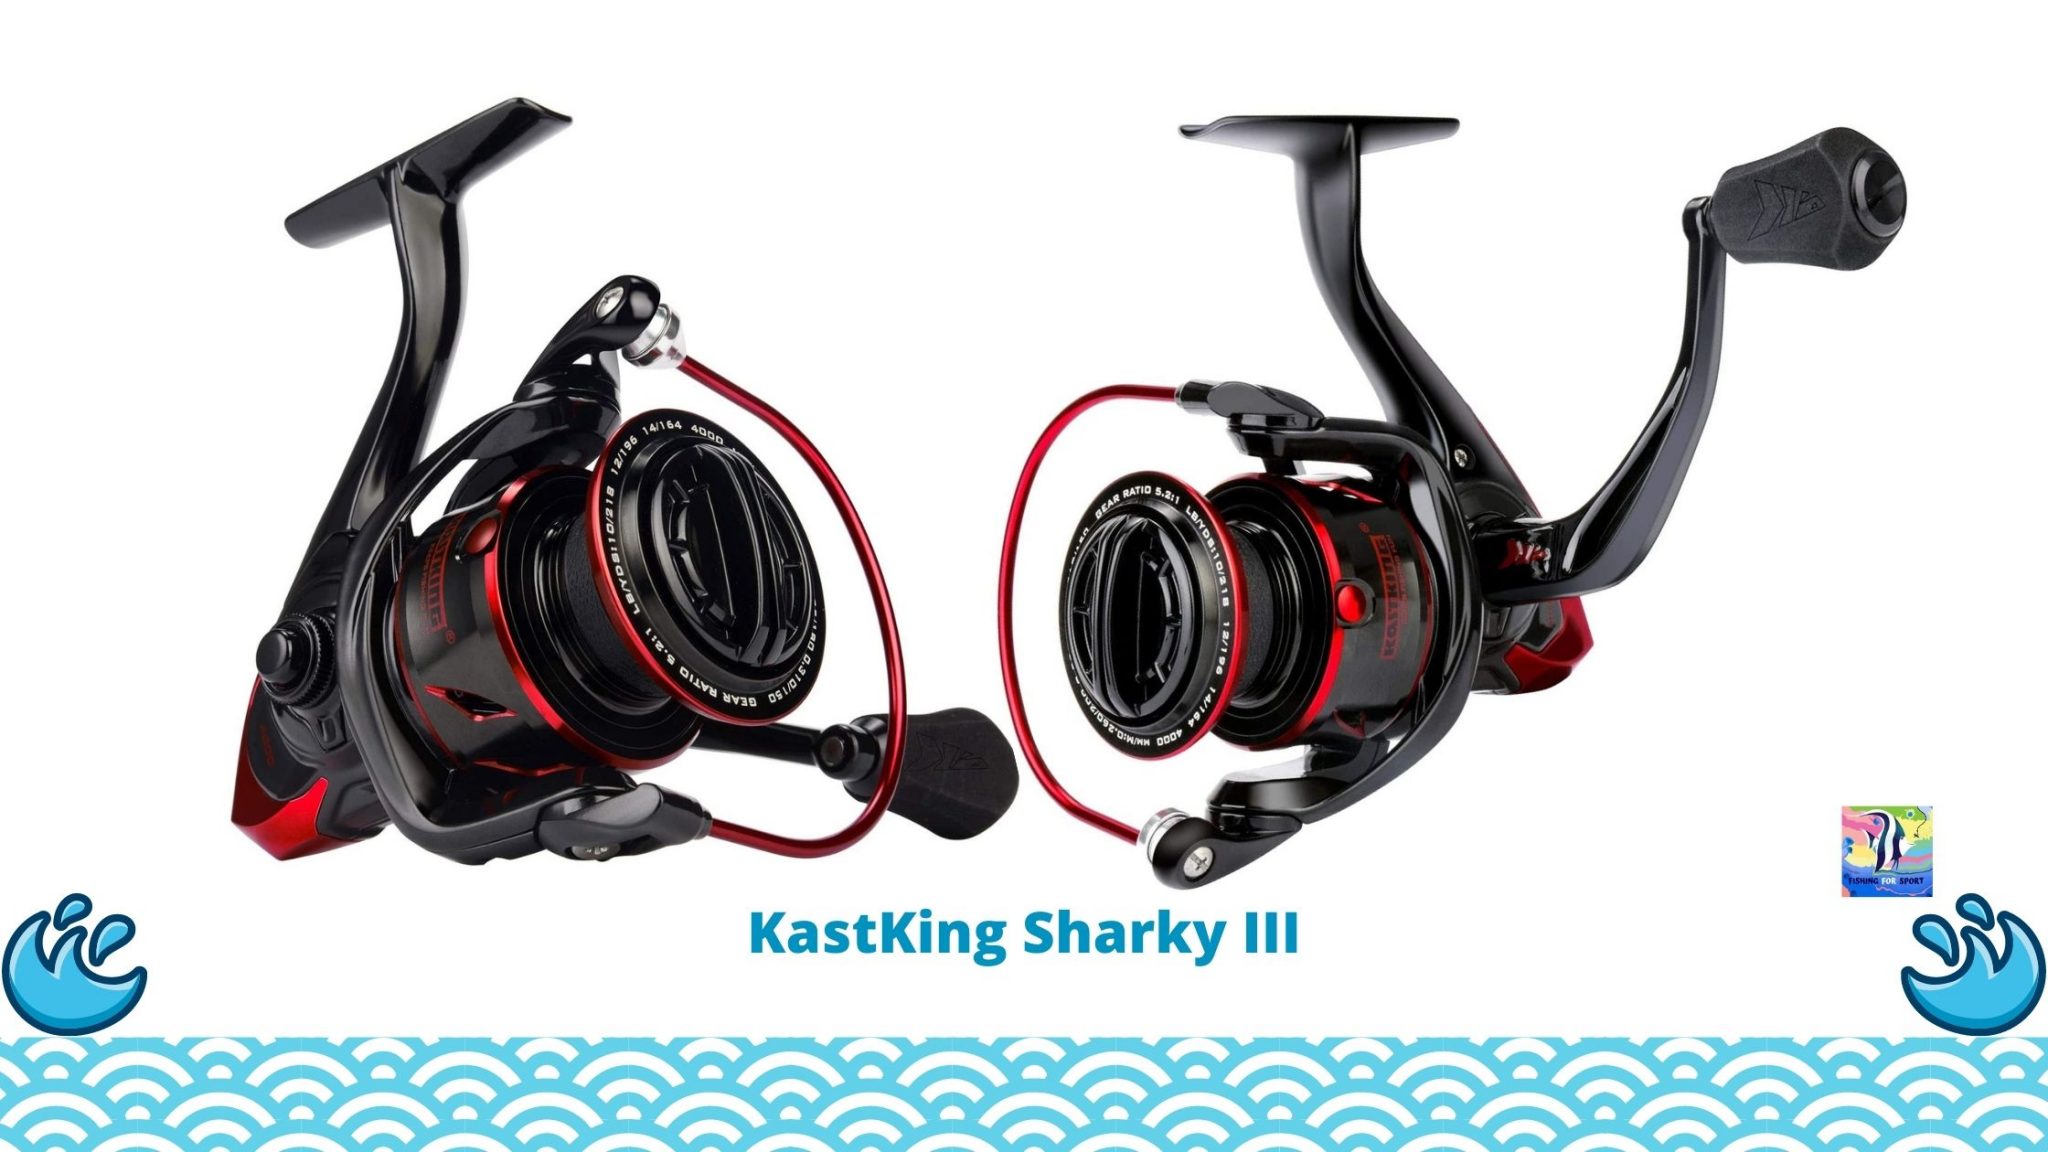 KastKing Sharky III 2000 5.2:1 11 BBs Saltwater Fishing Reel 33LB Graphite Frame 